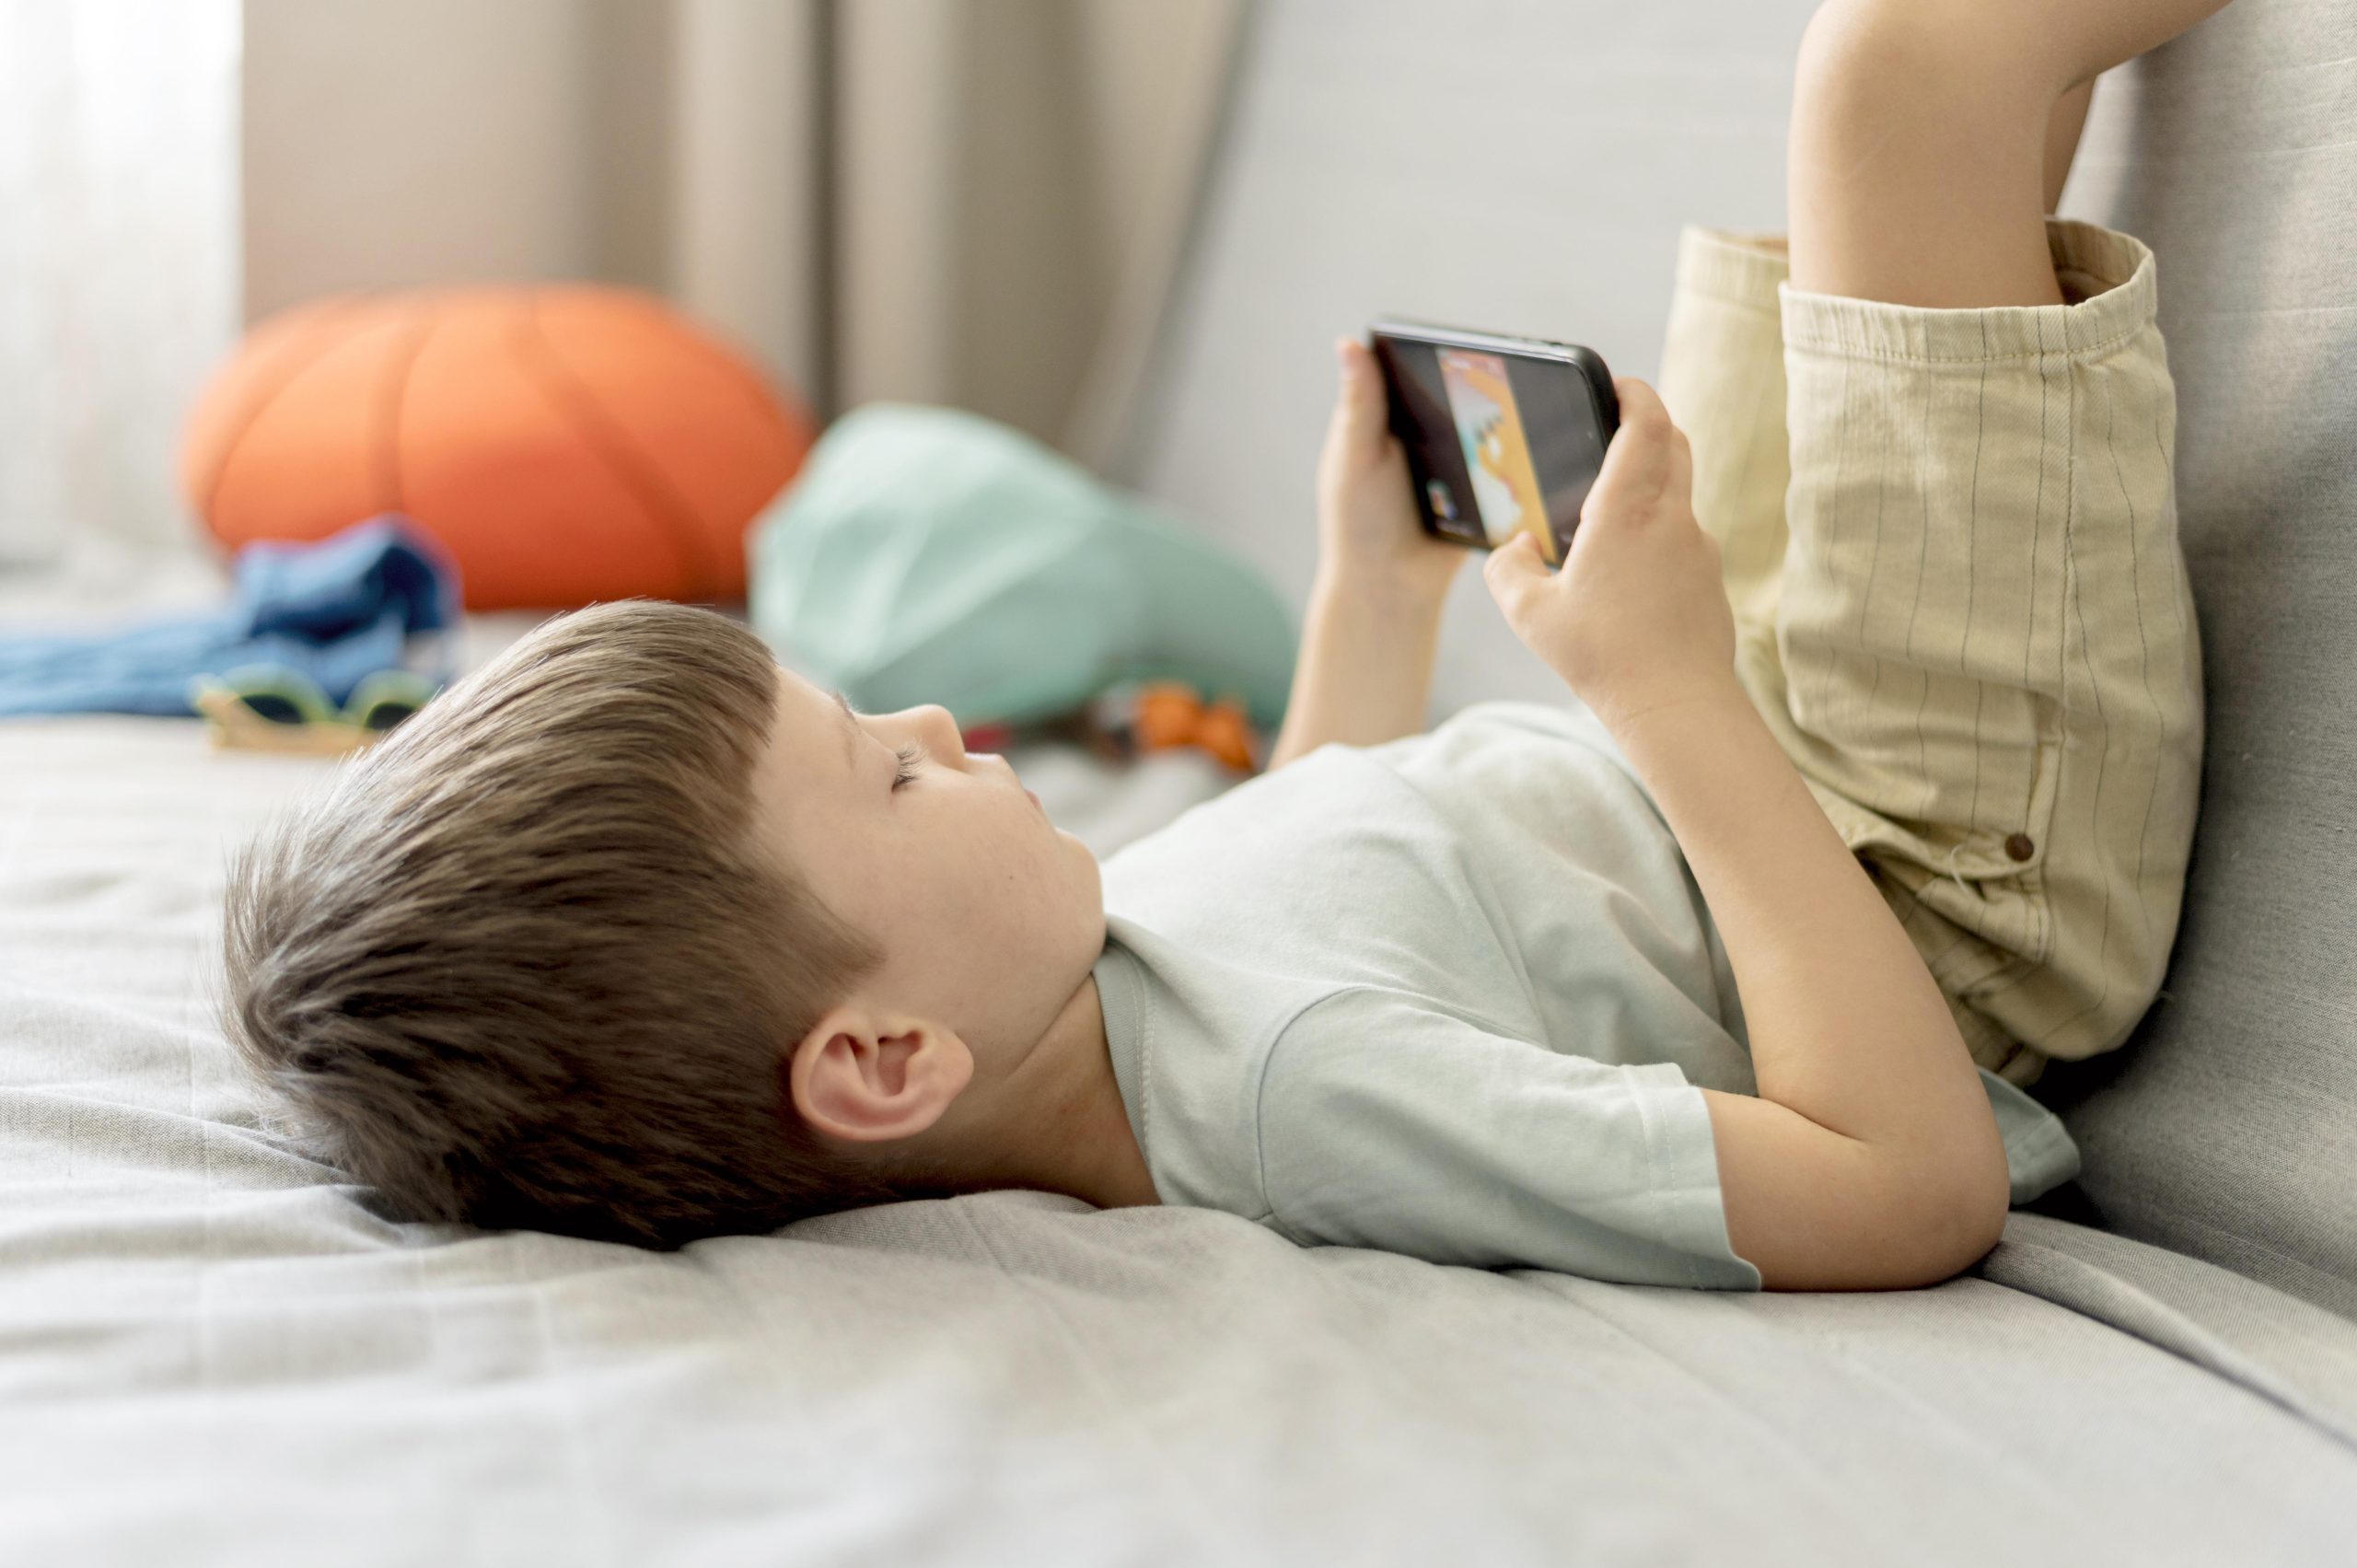 The impact of screen time on children’s gross motor skills